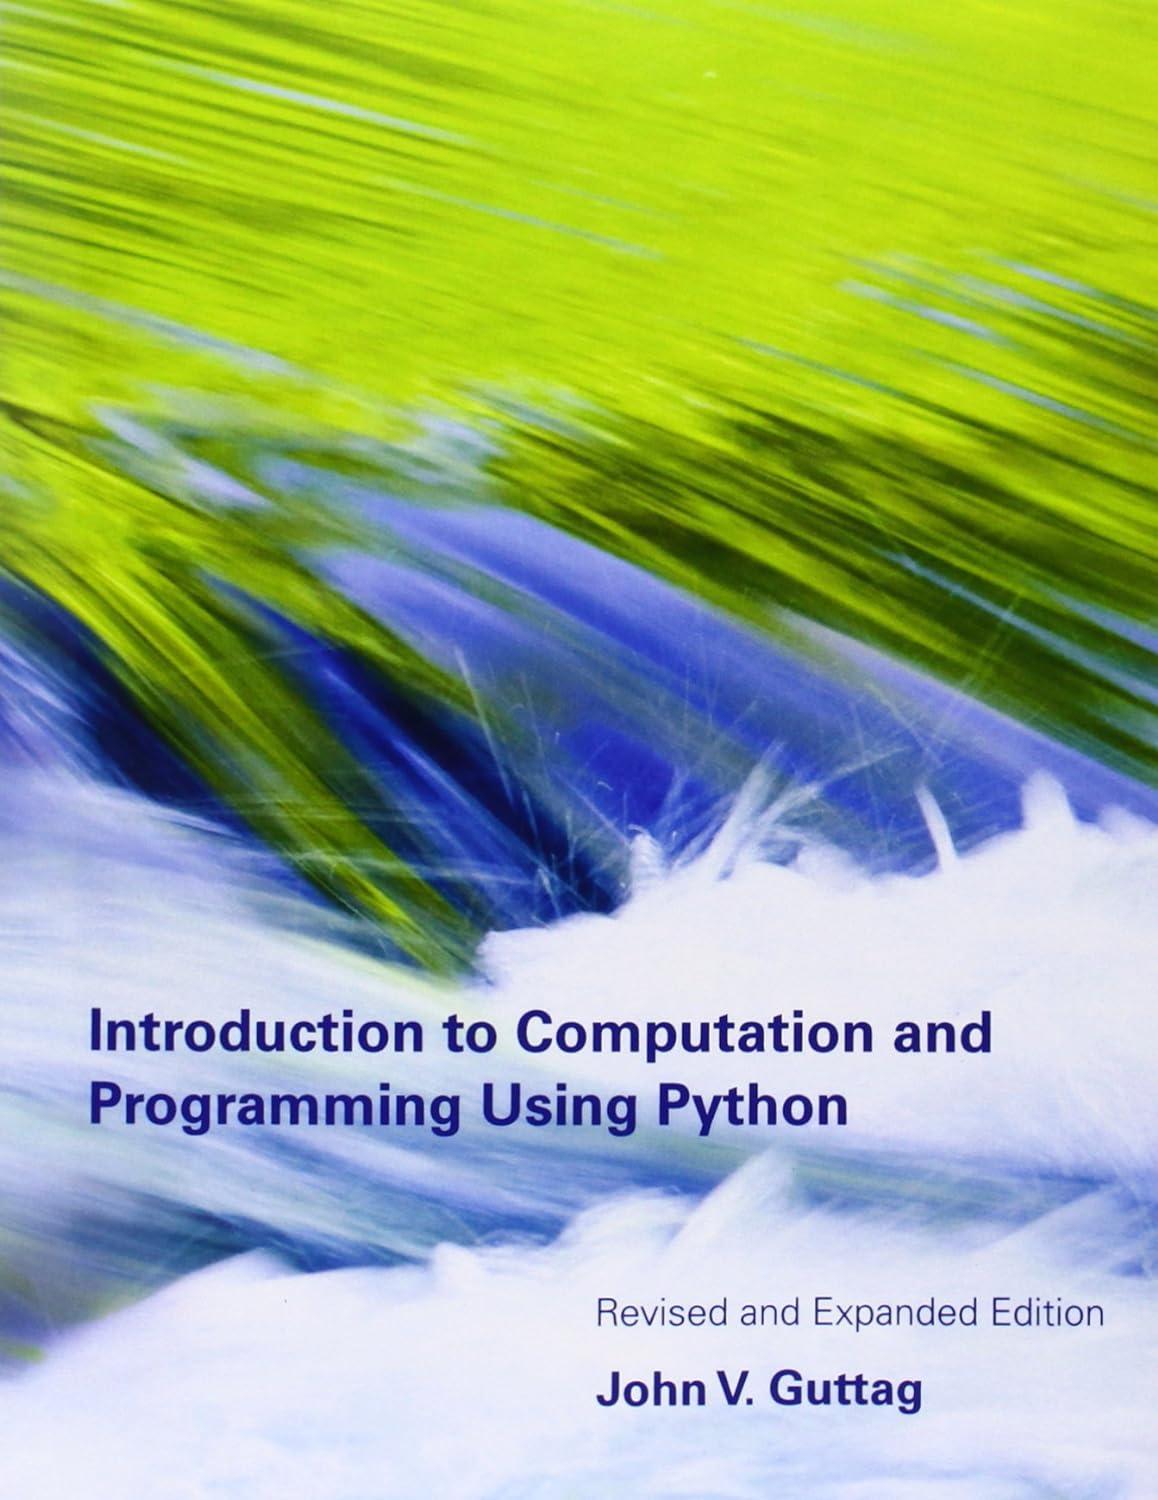 introduction to computation and programming using python 1st edition john v. guttag 0262525003, 978-0262525008